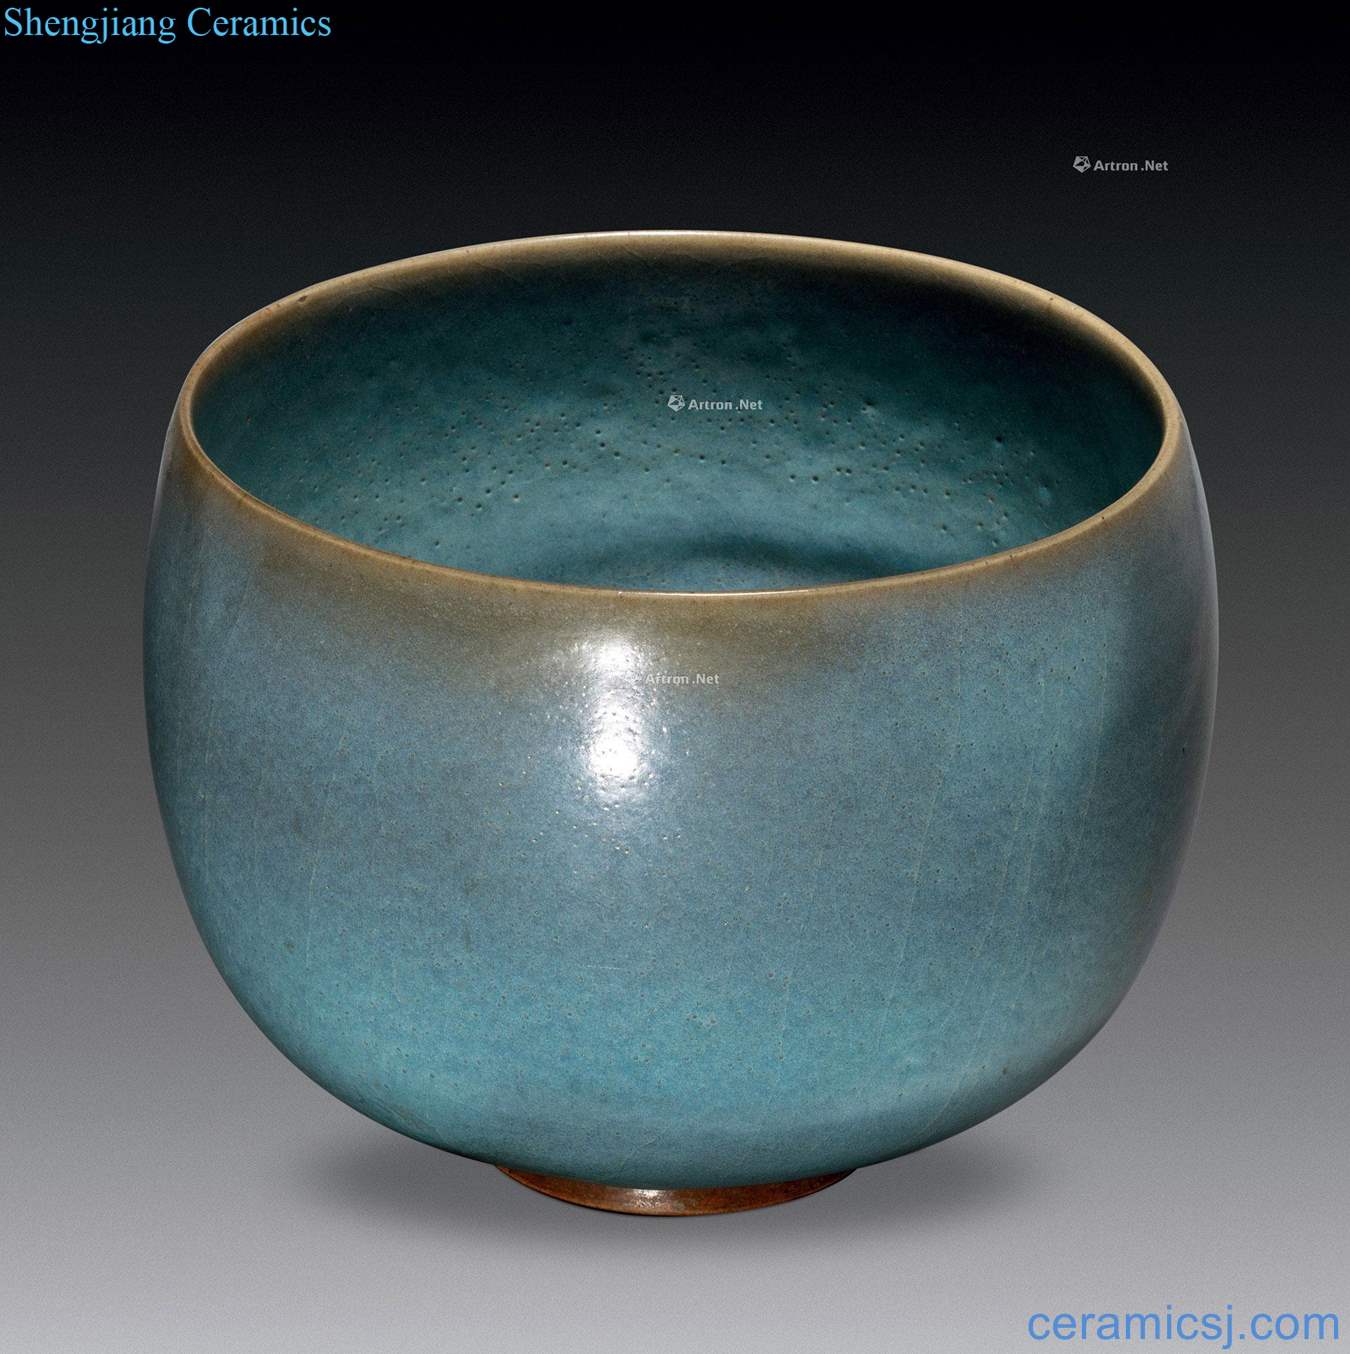 The song dynasty Sky blue glaze masterpieces deep bowl